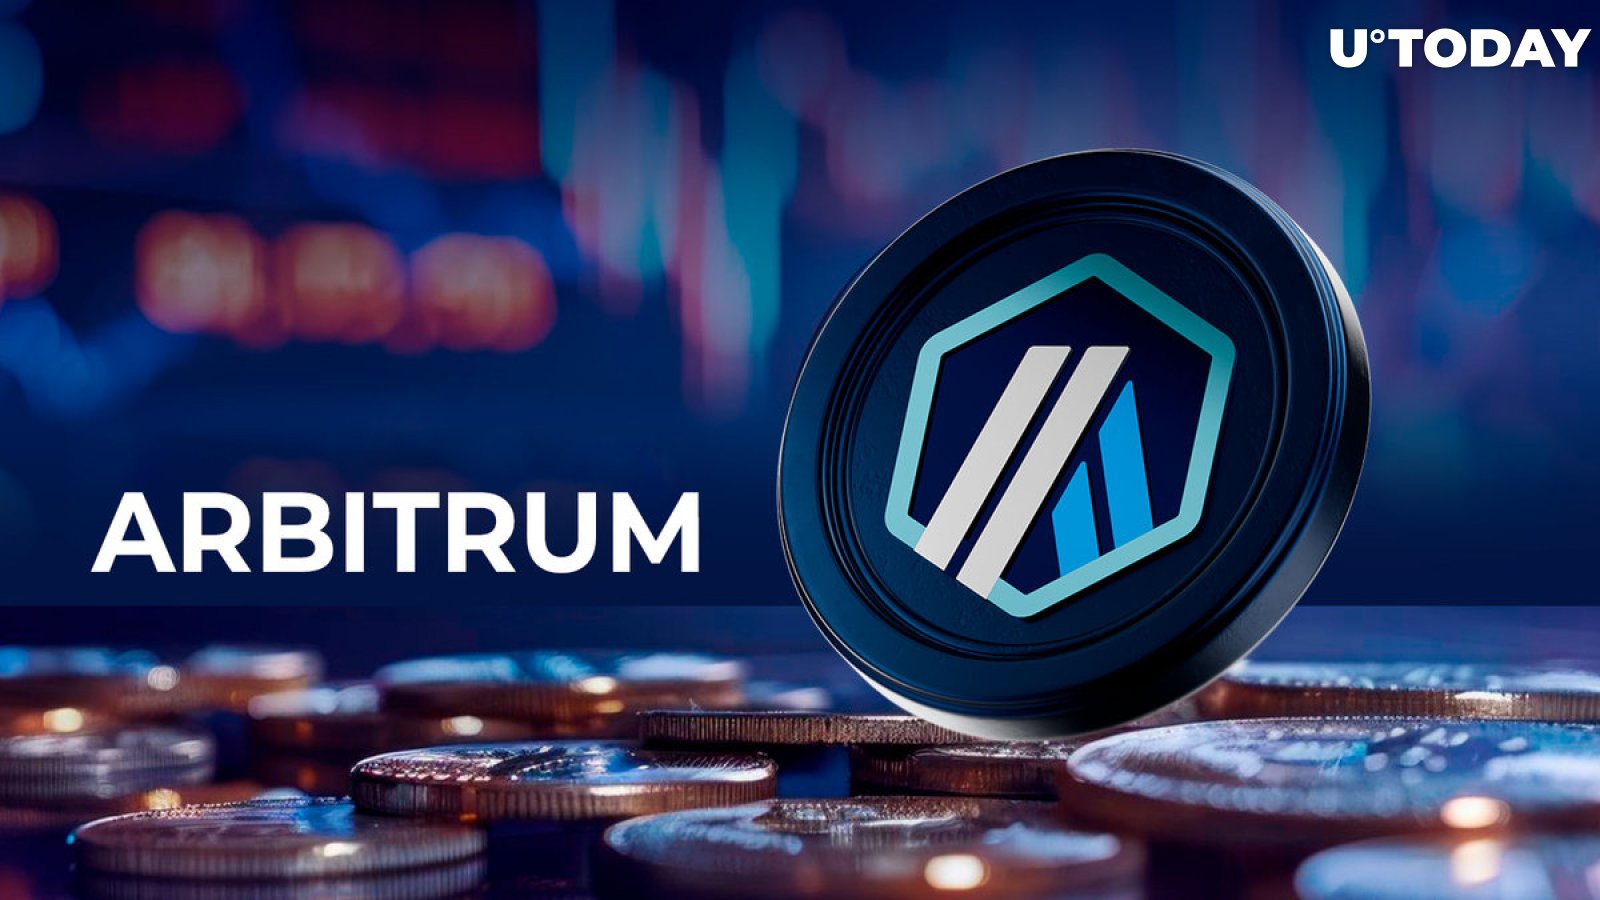 Arbitrum (ARB) will unlock 1.1 billion tokens, how will the price react?